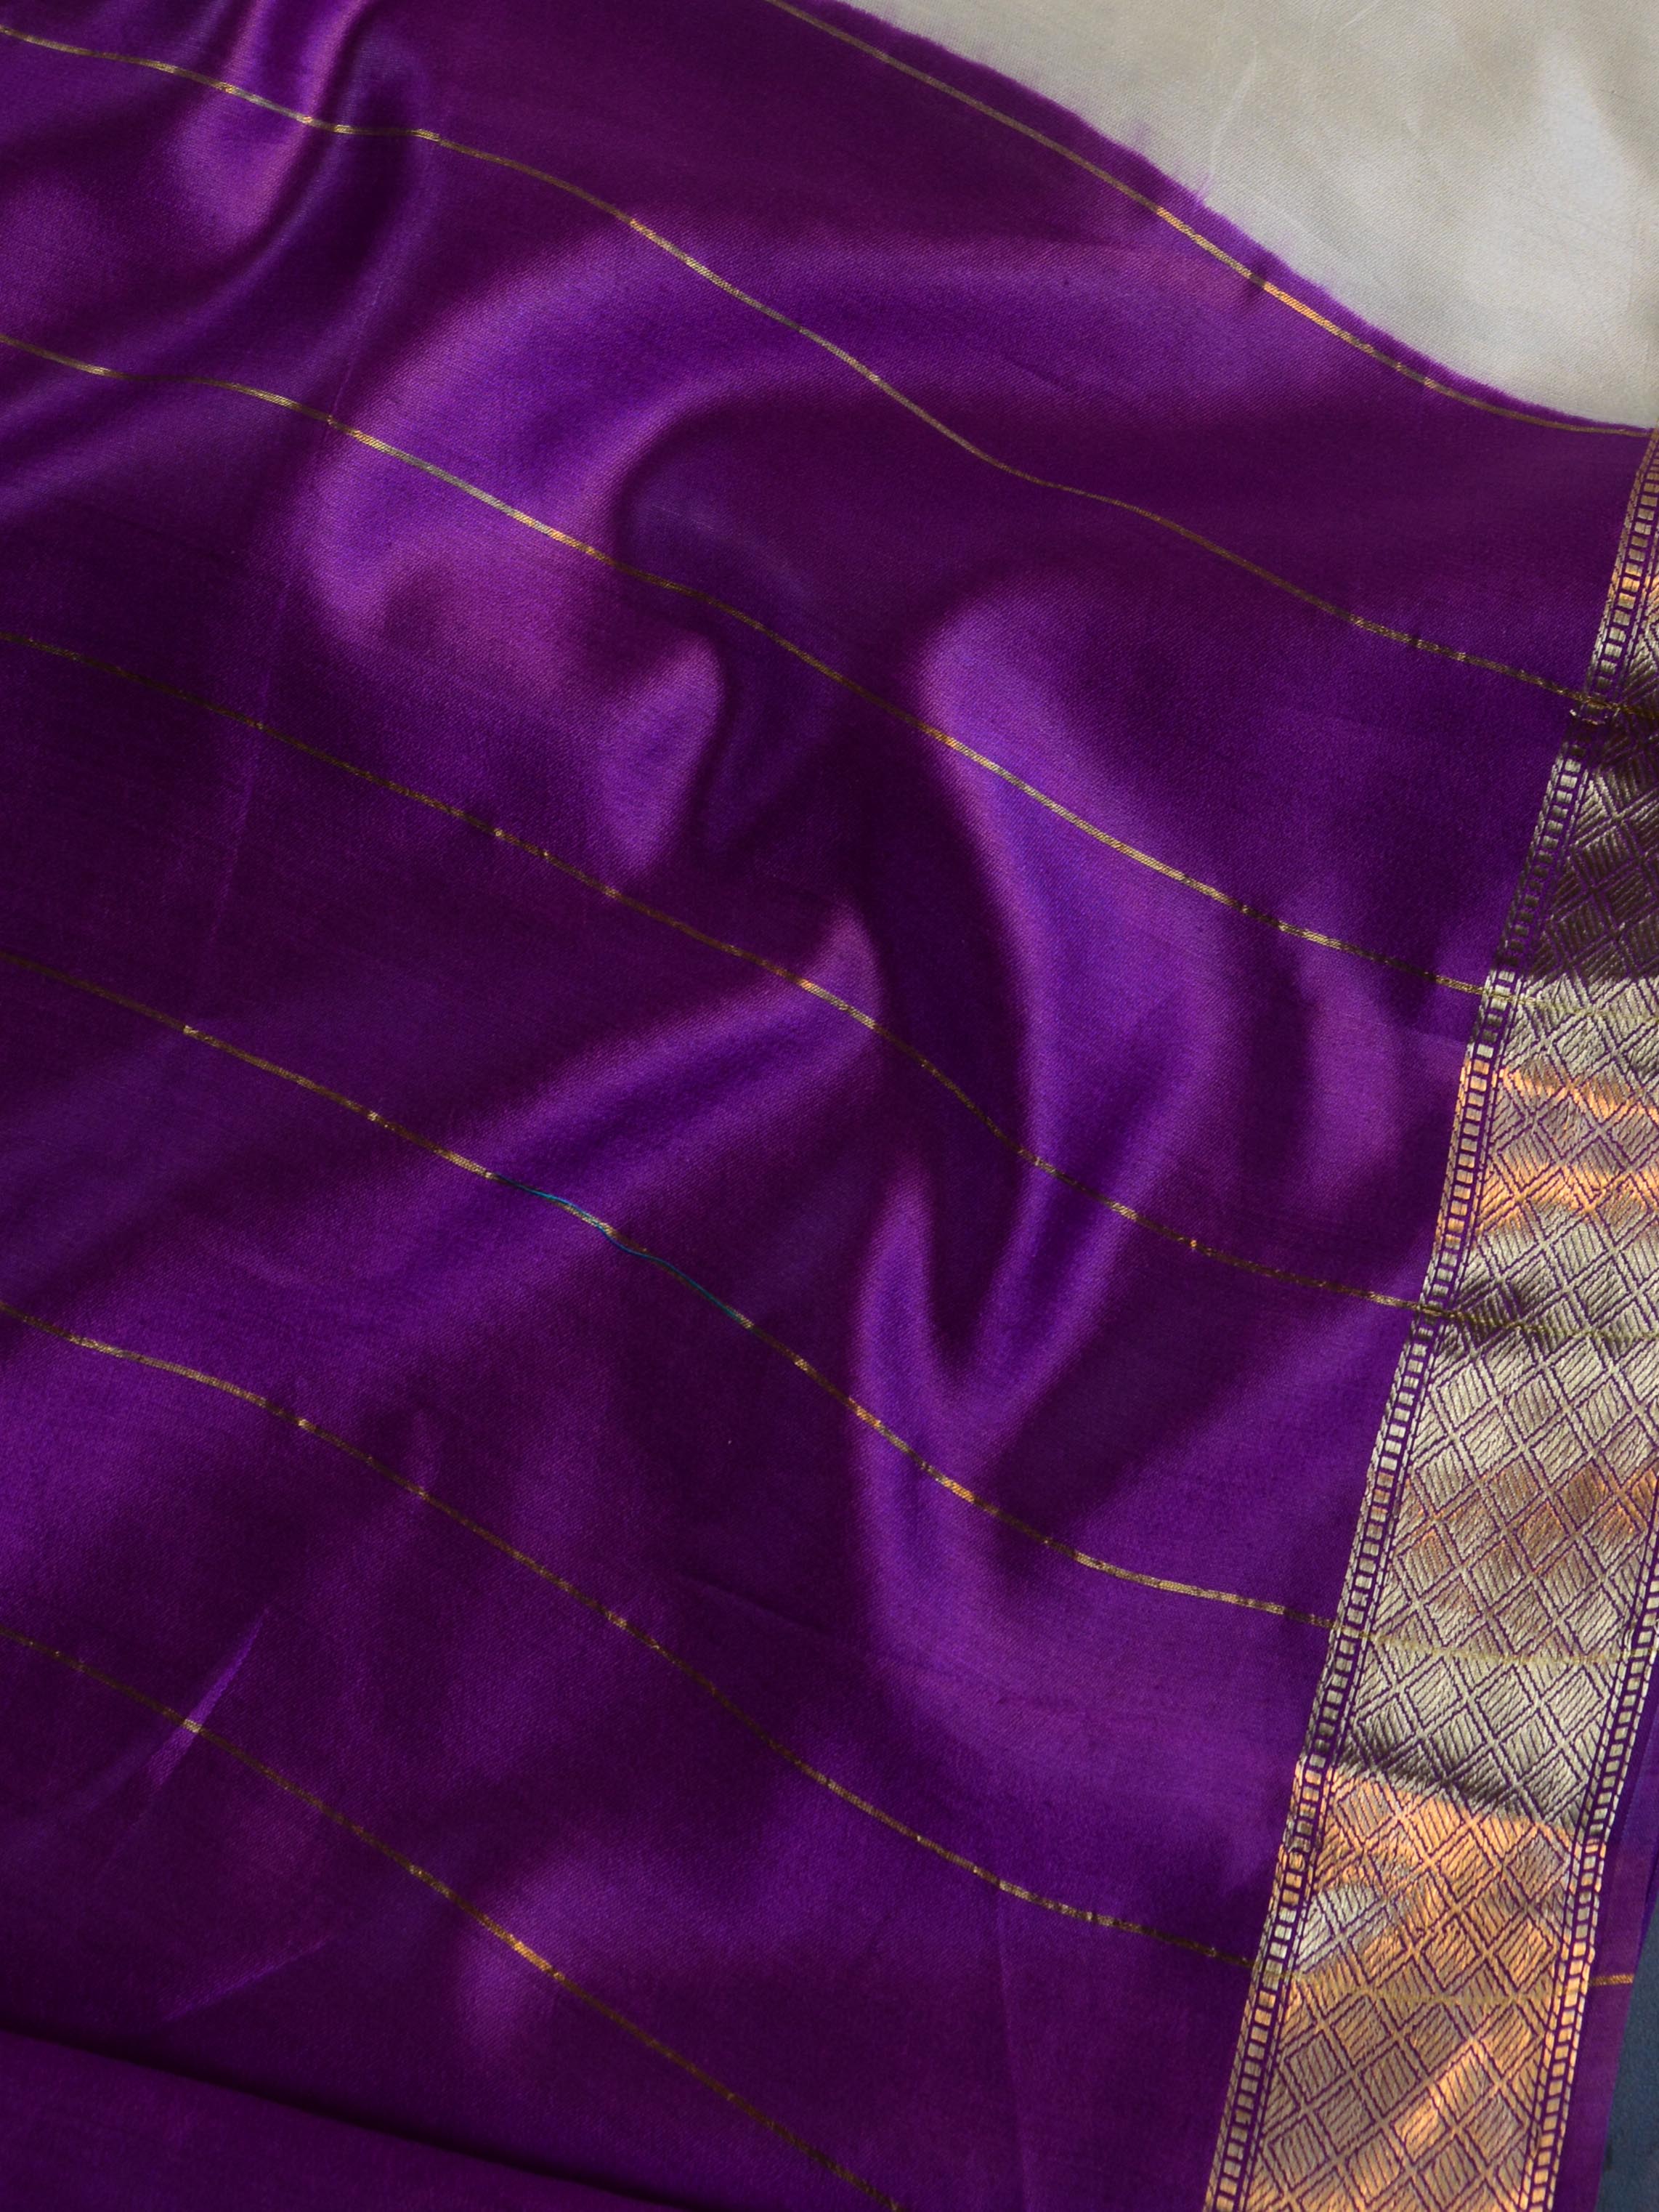 Banarasee Handloom Pure Chiniya Silk Saree With Zari Border-White & Violet